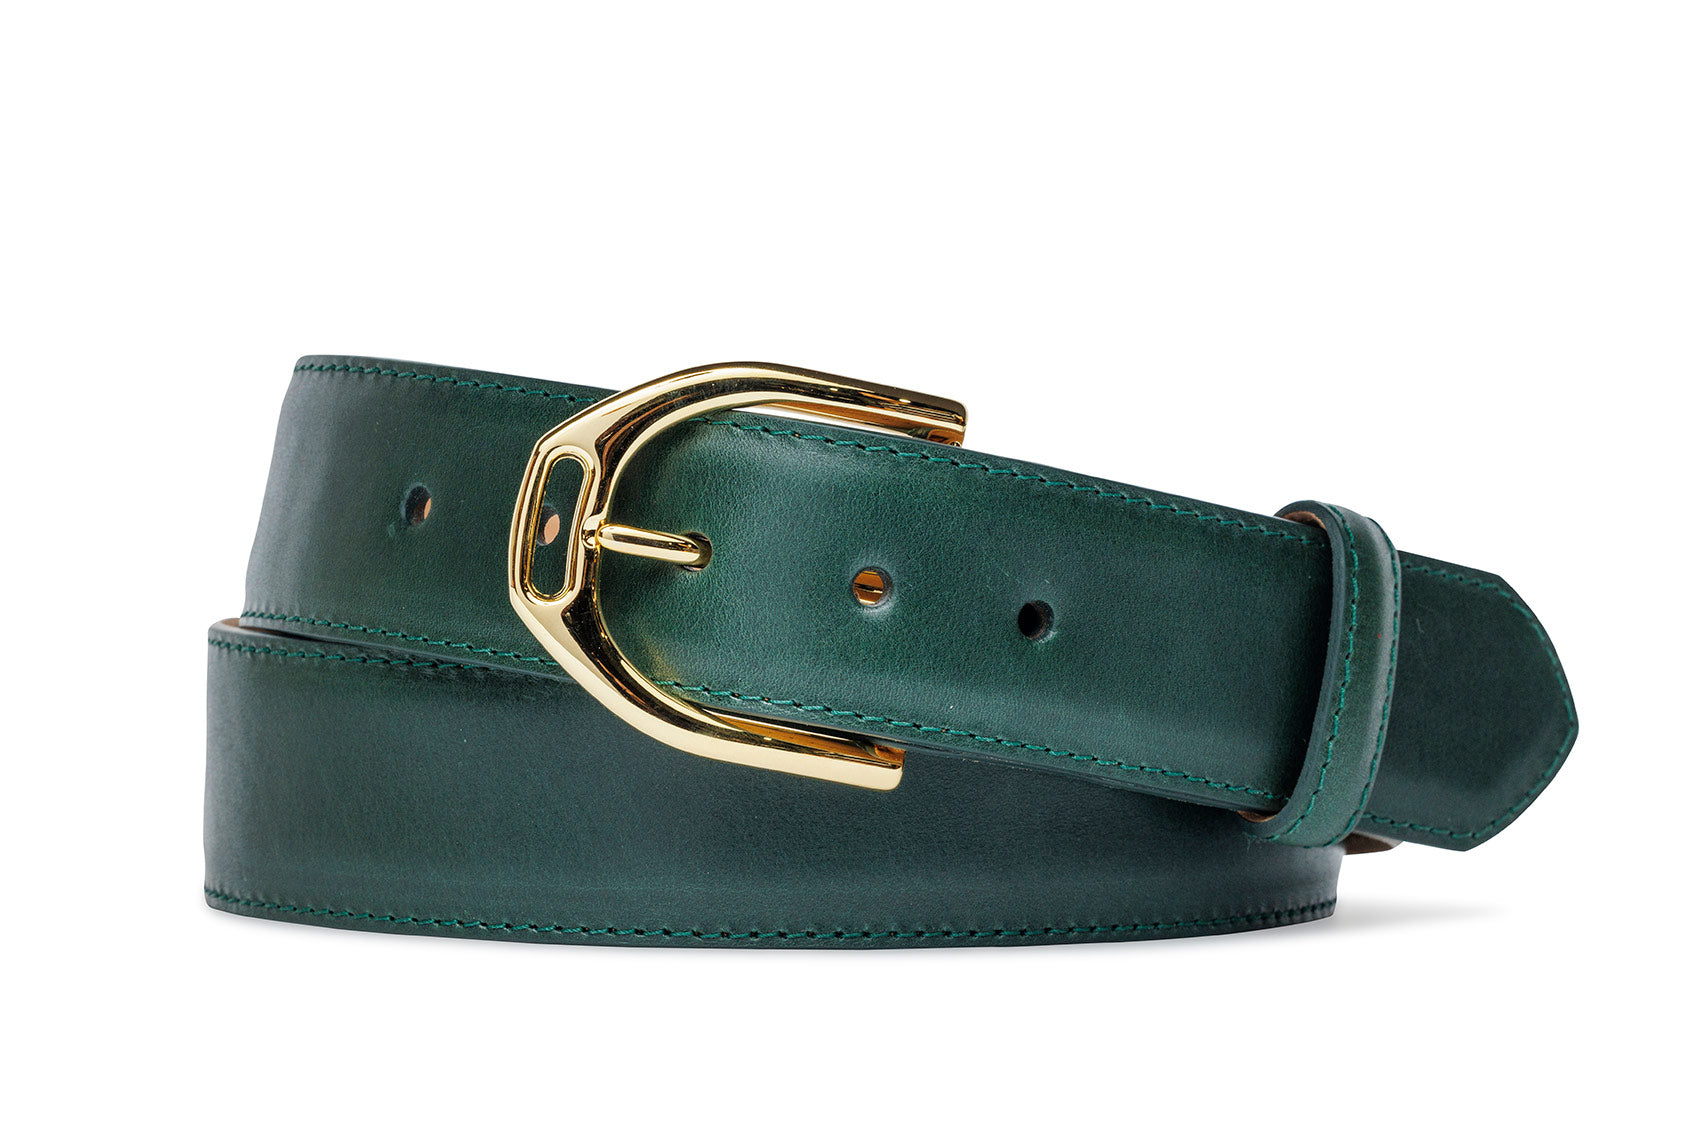 Catelles Women's Genuine Leather Belt